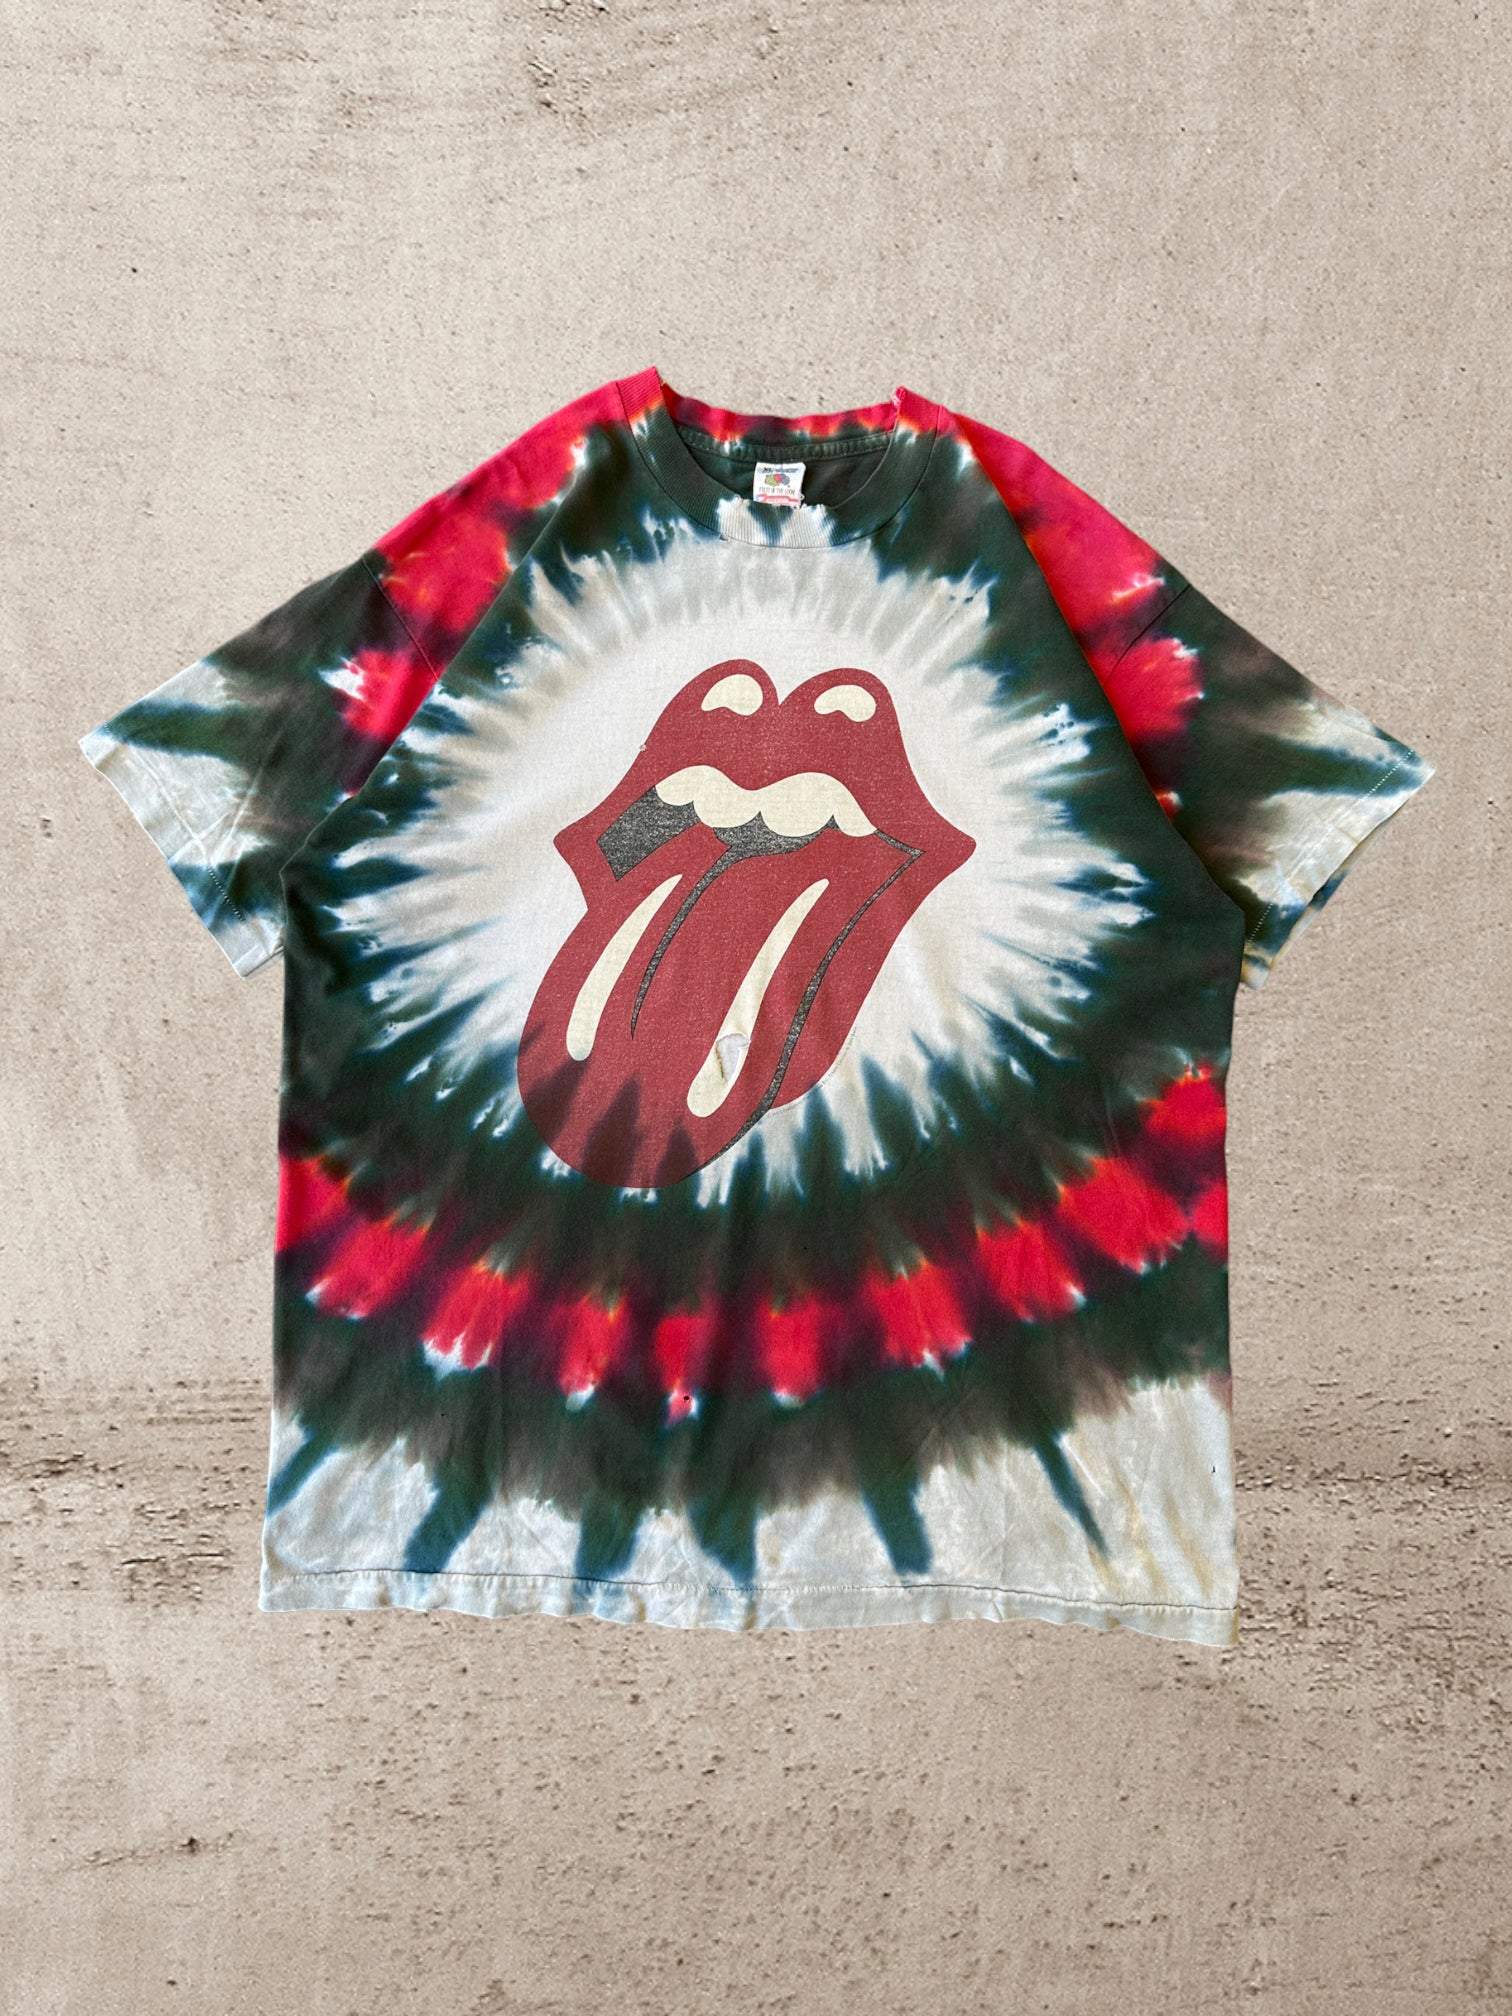 1994 Rolling Stones Tie Dye Shirt - XL